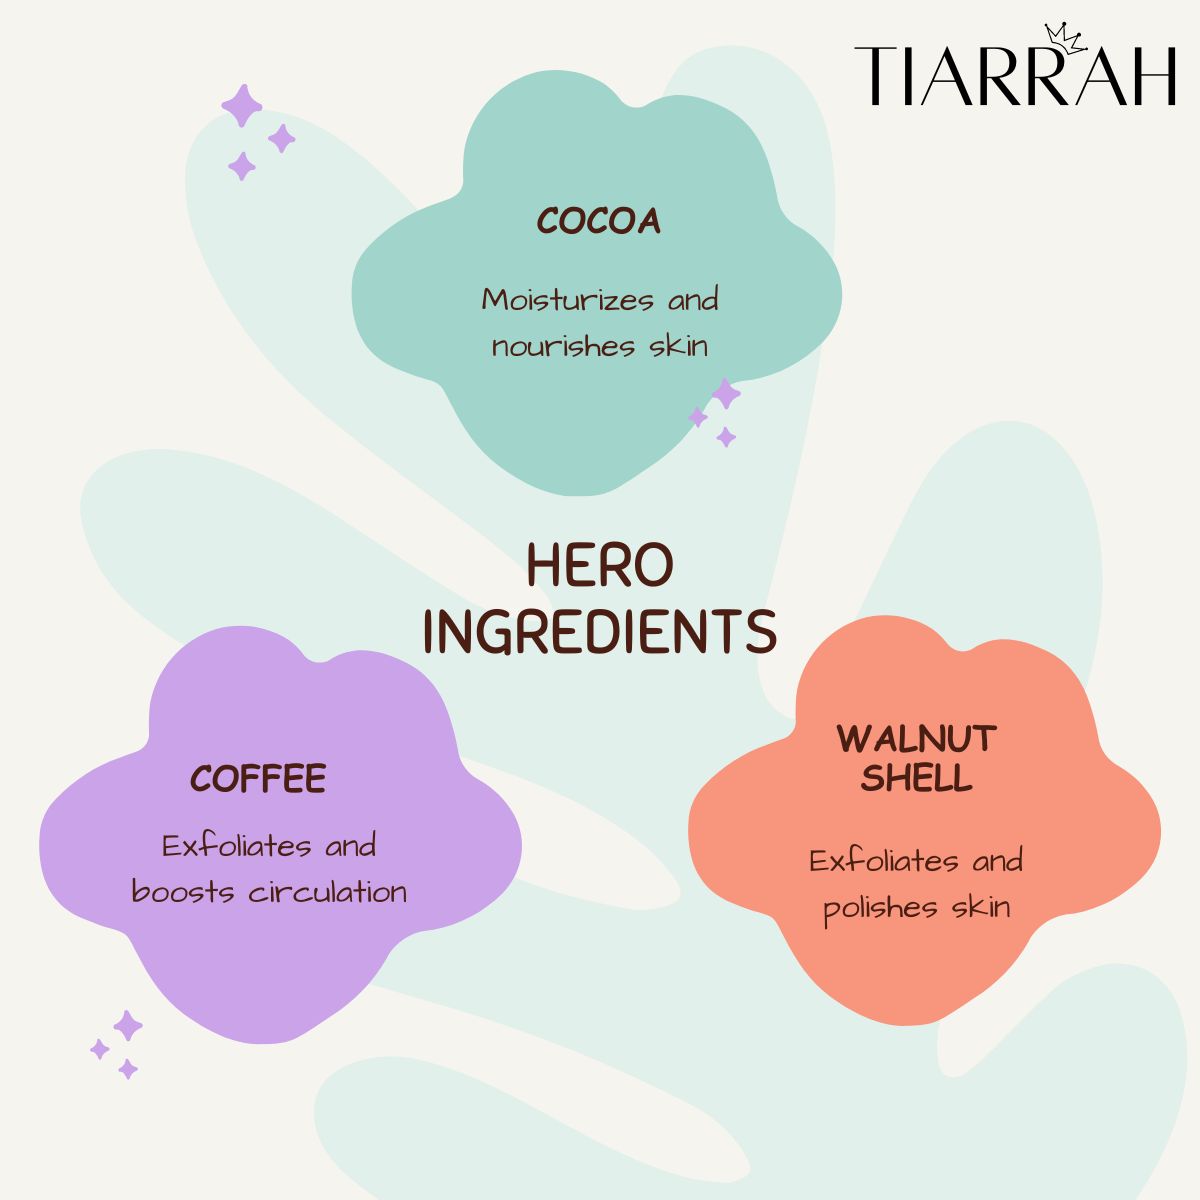 Tiarrah's Chocolate Face Scrub: Natural & Non-Toxic - The Luxury Bath and Body Care Shop